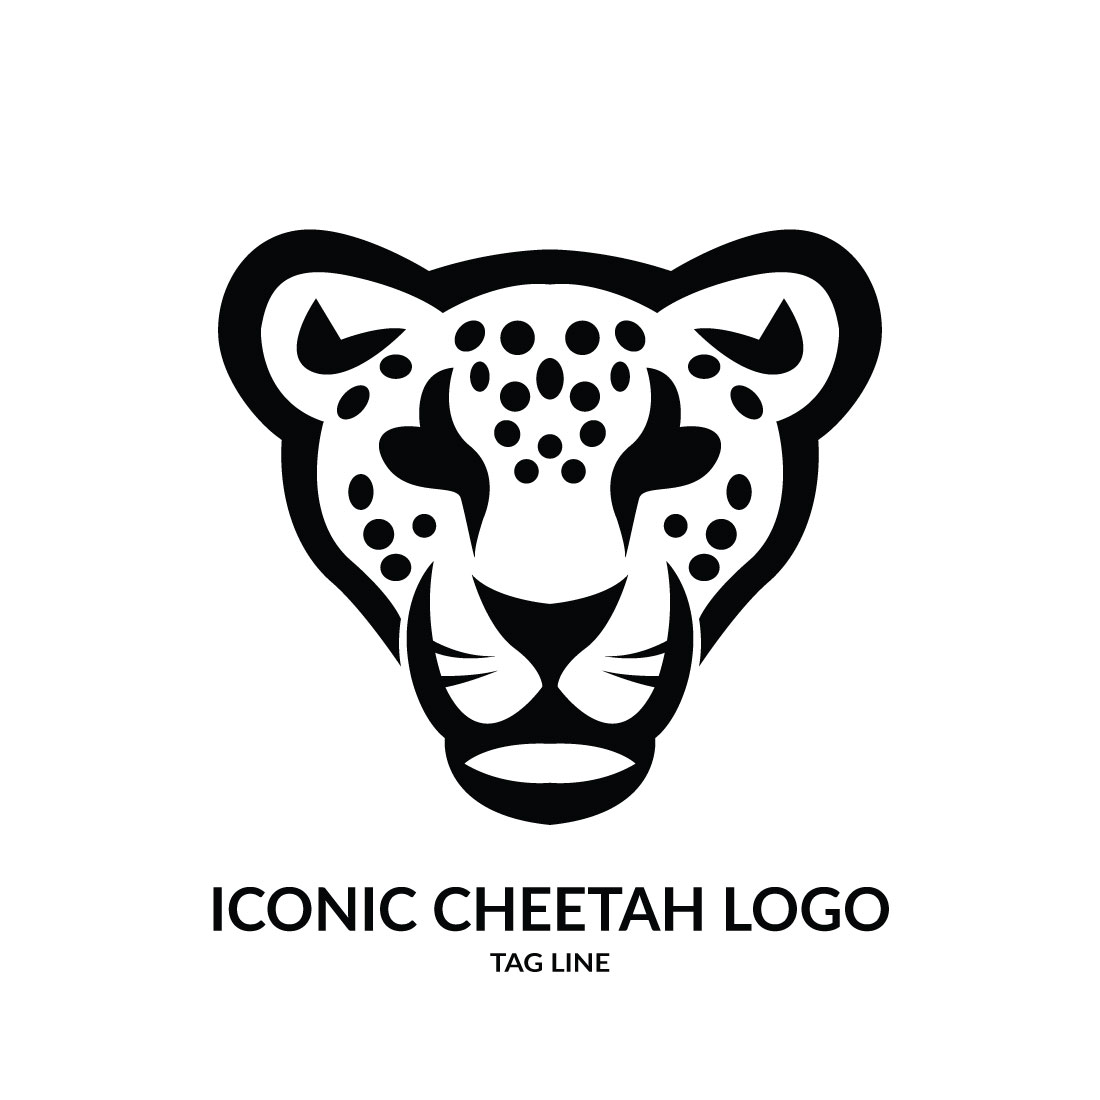 Cheetah logo, Vector Logo of Cheetah brand free download (eps, ai